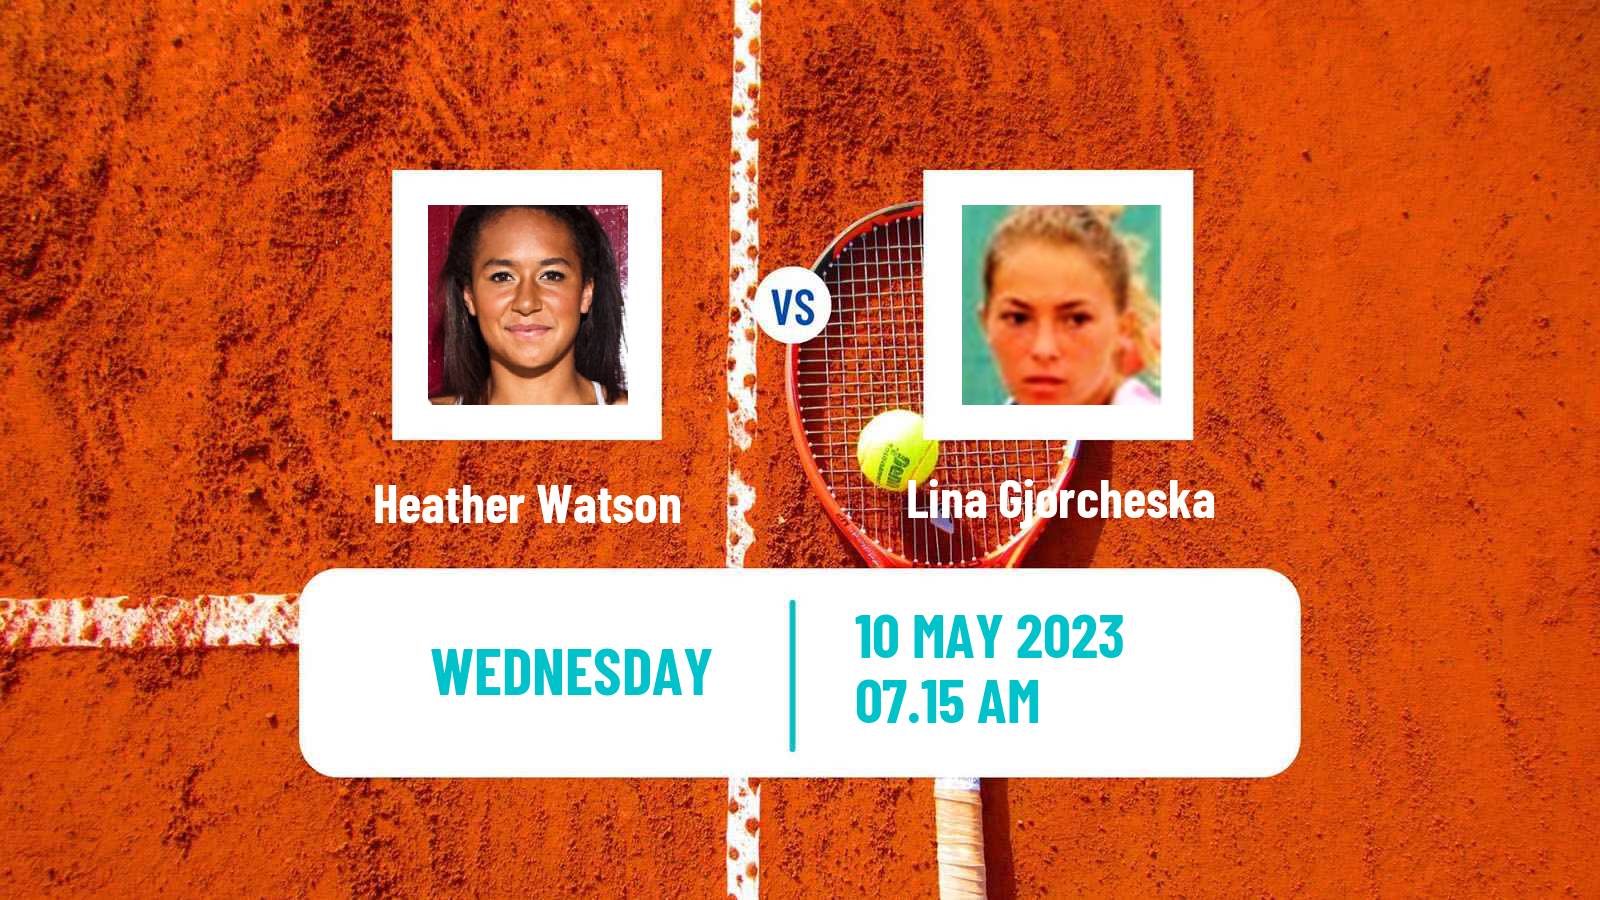 Tennis ITF Tournaments Heather Watson - Lina Gjorcheska